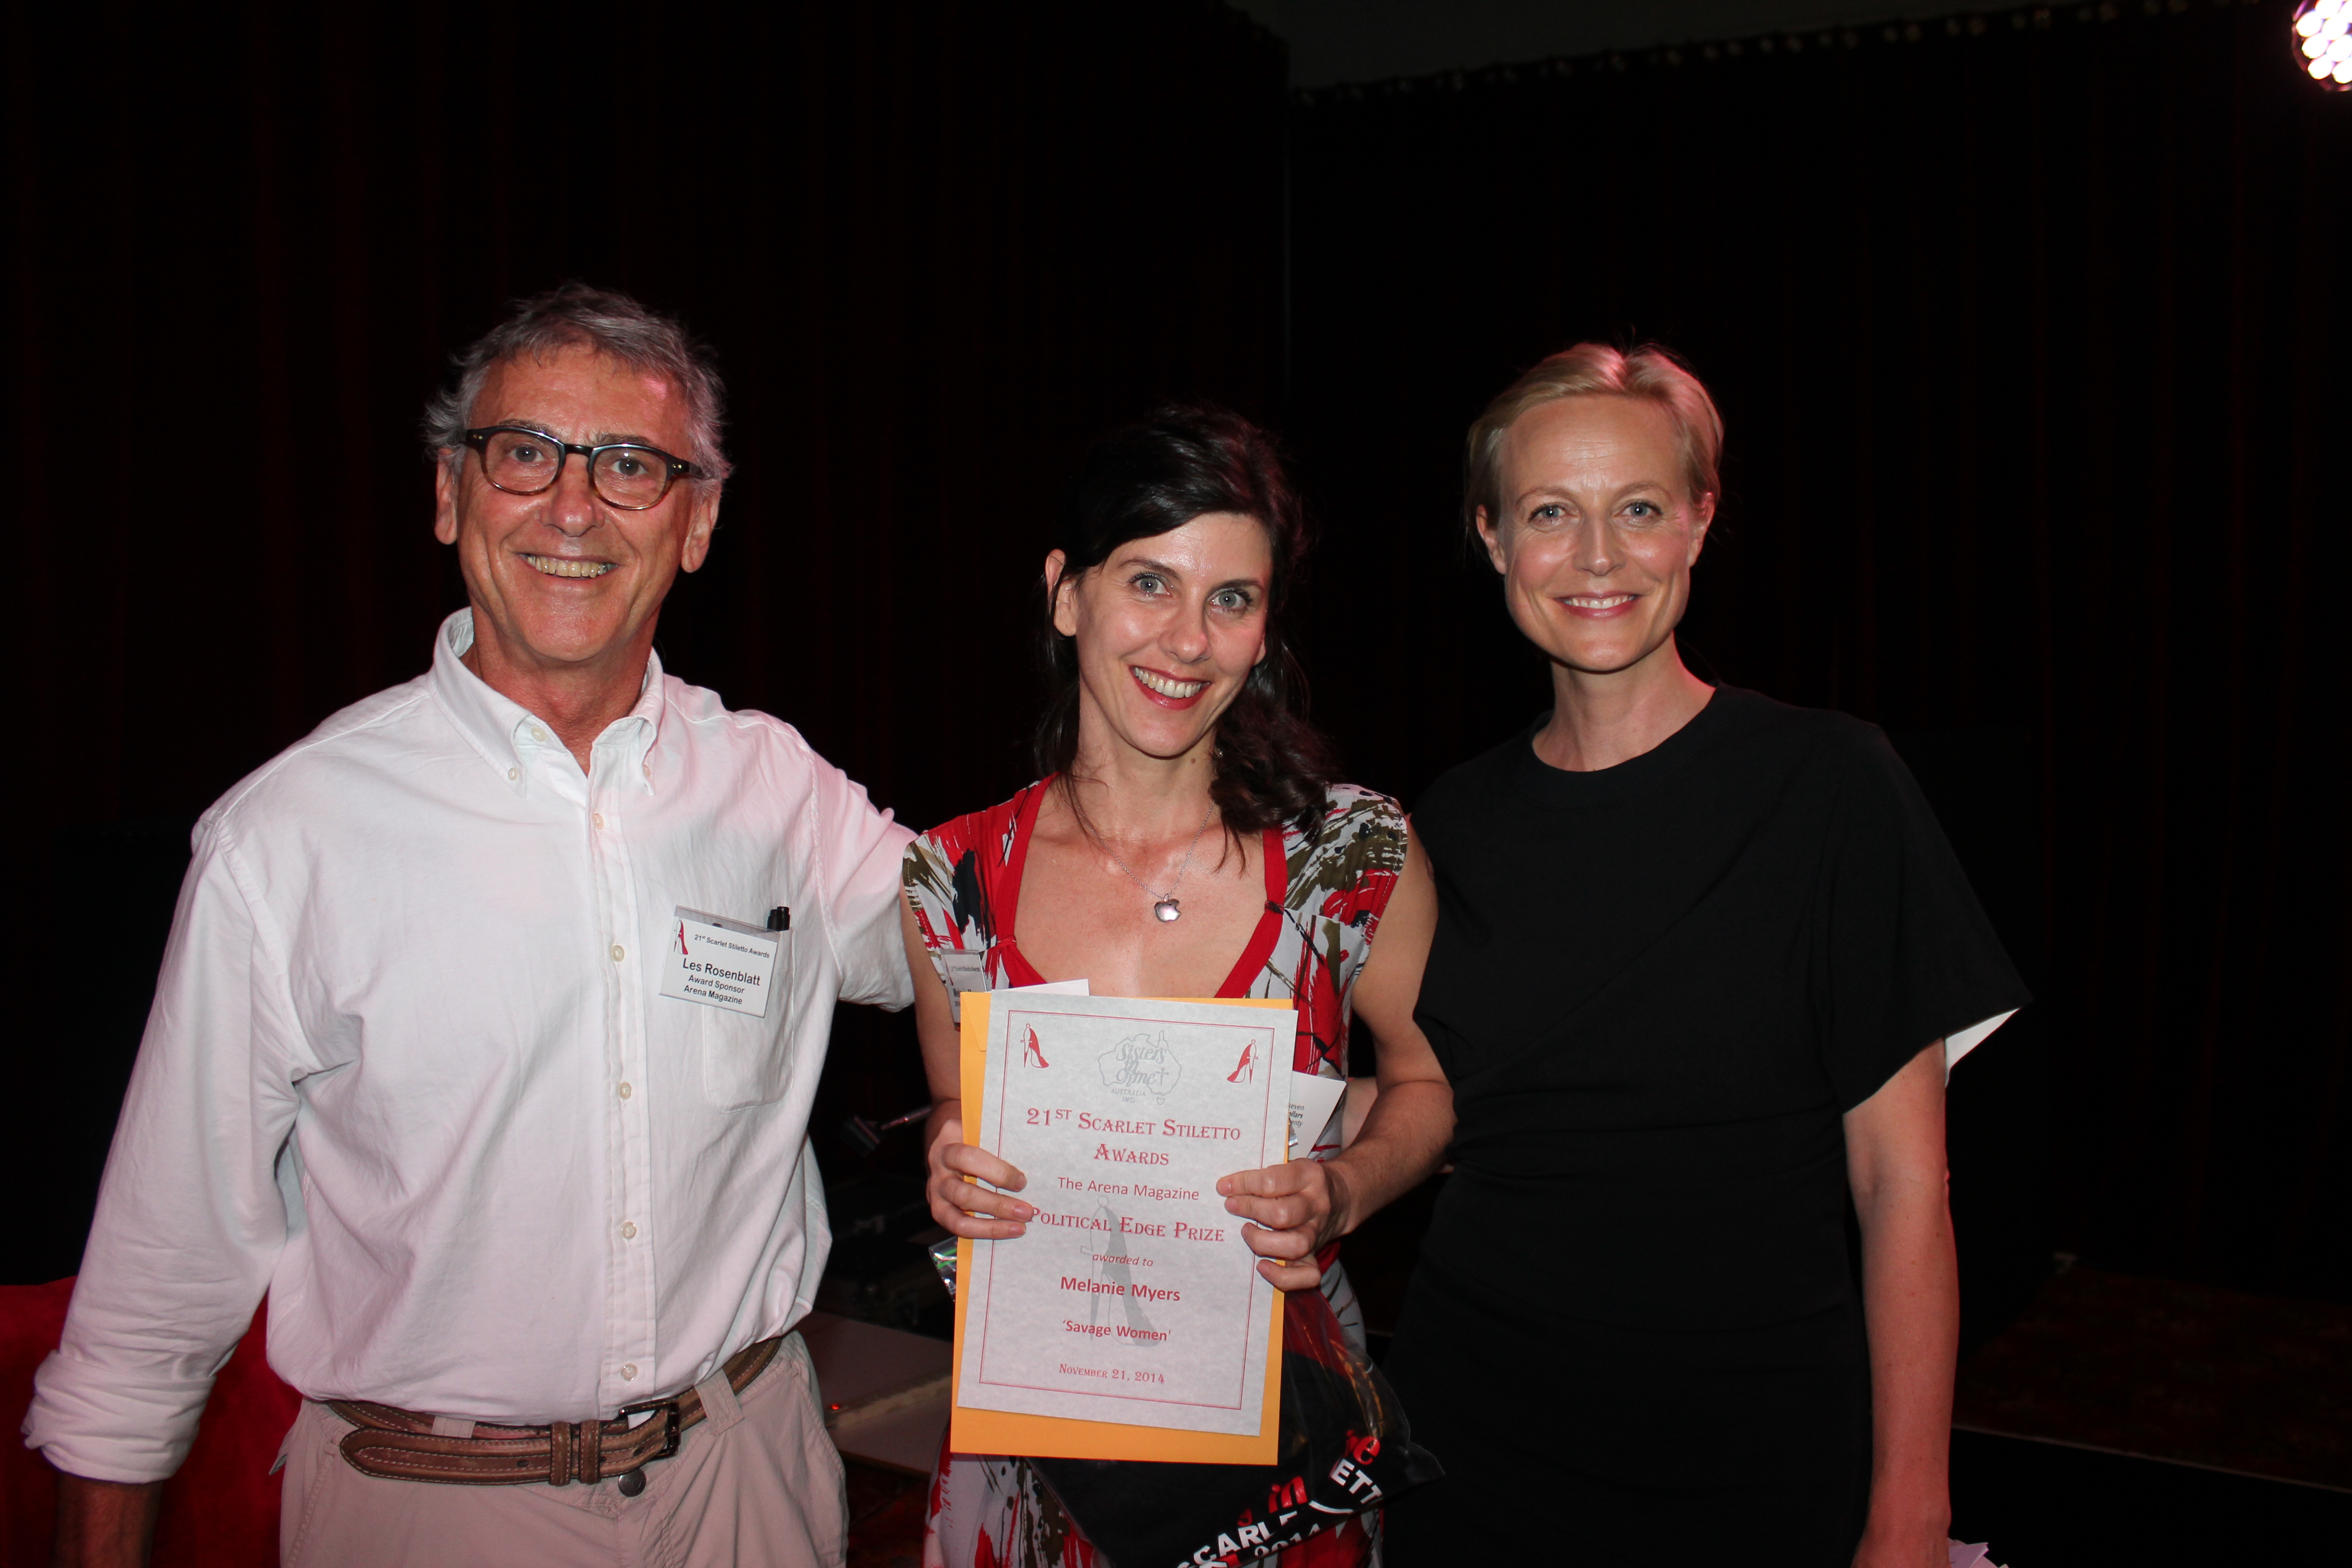 2014 Arena magazine prize winner Melanie Myers, flanked by Les Rosenbatt (Arena Magazine Board) & Awards presenter, actor Marta Dusseldorp